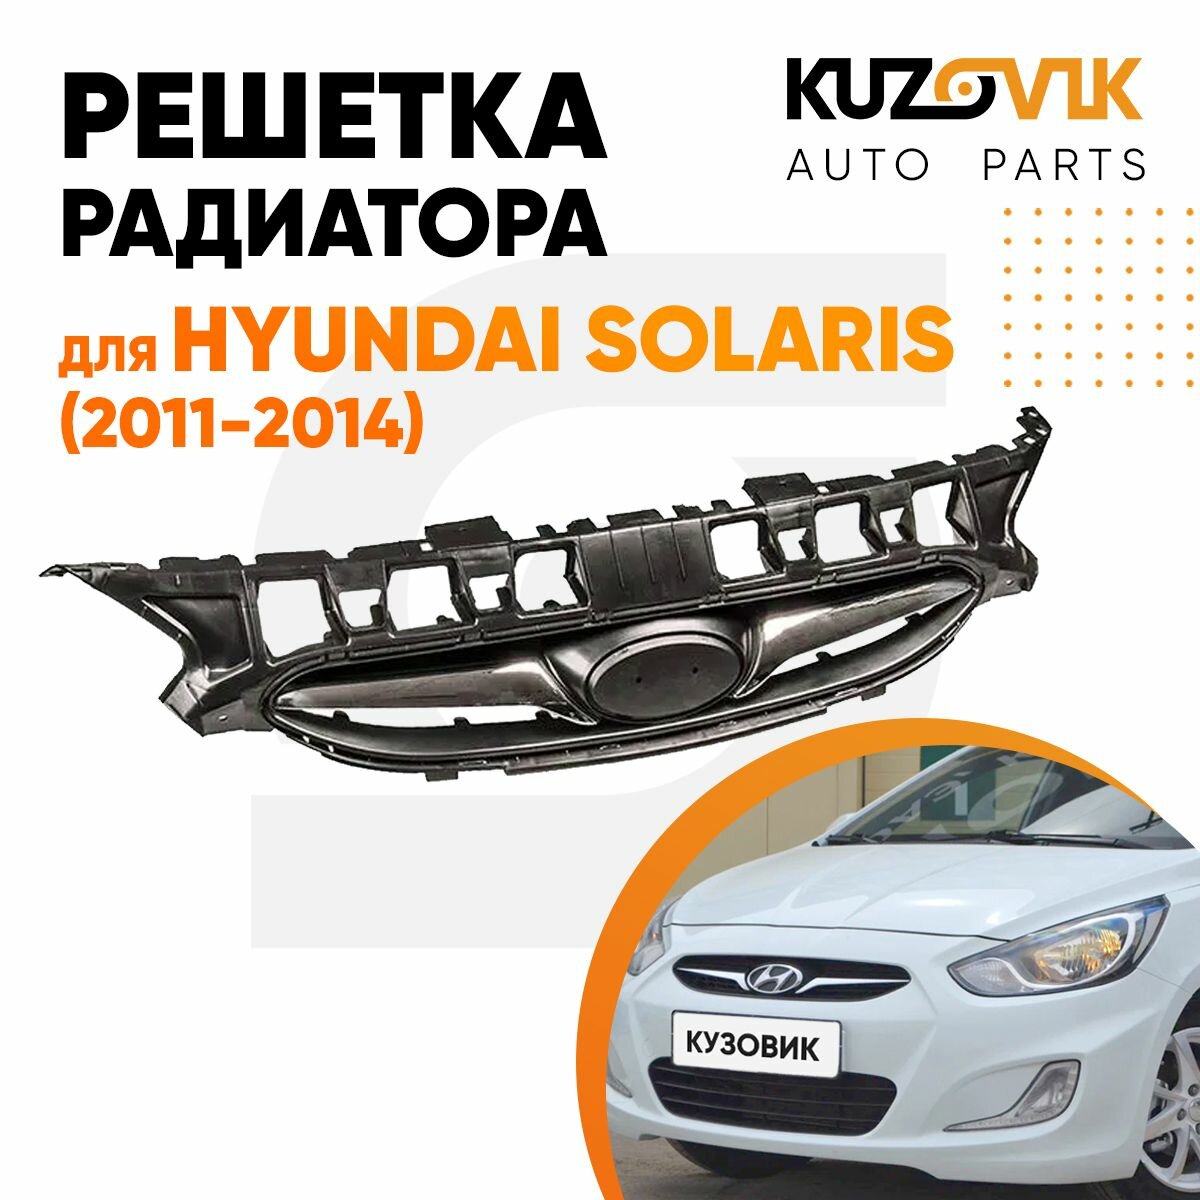 Решетка радиатора Hyundai Solaris (2011-2014)